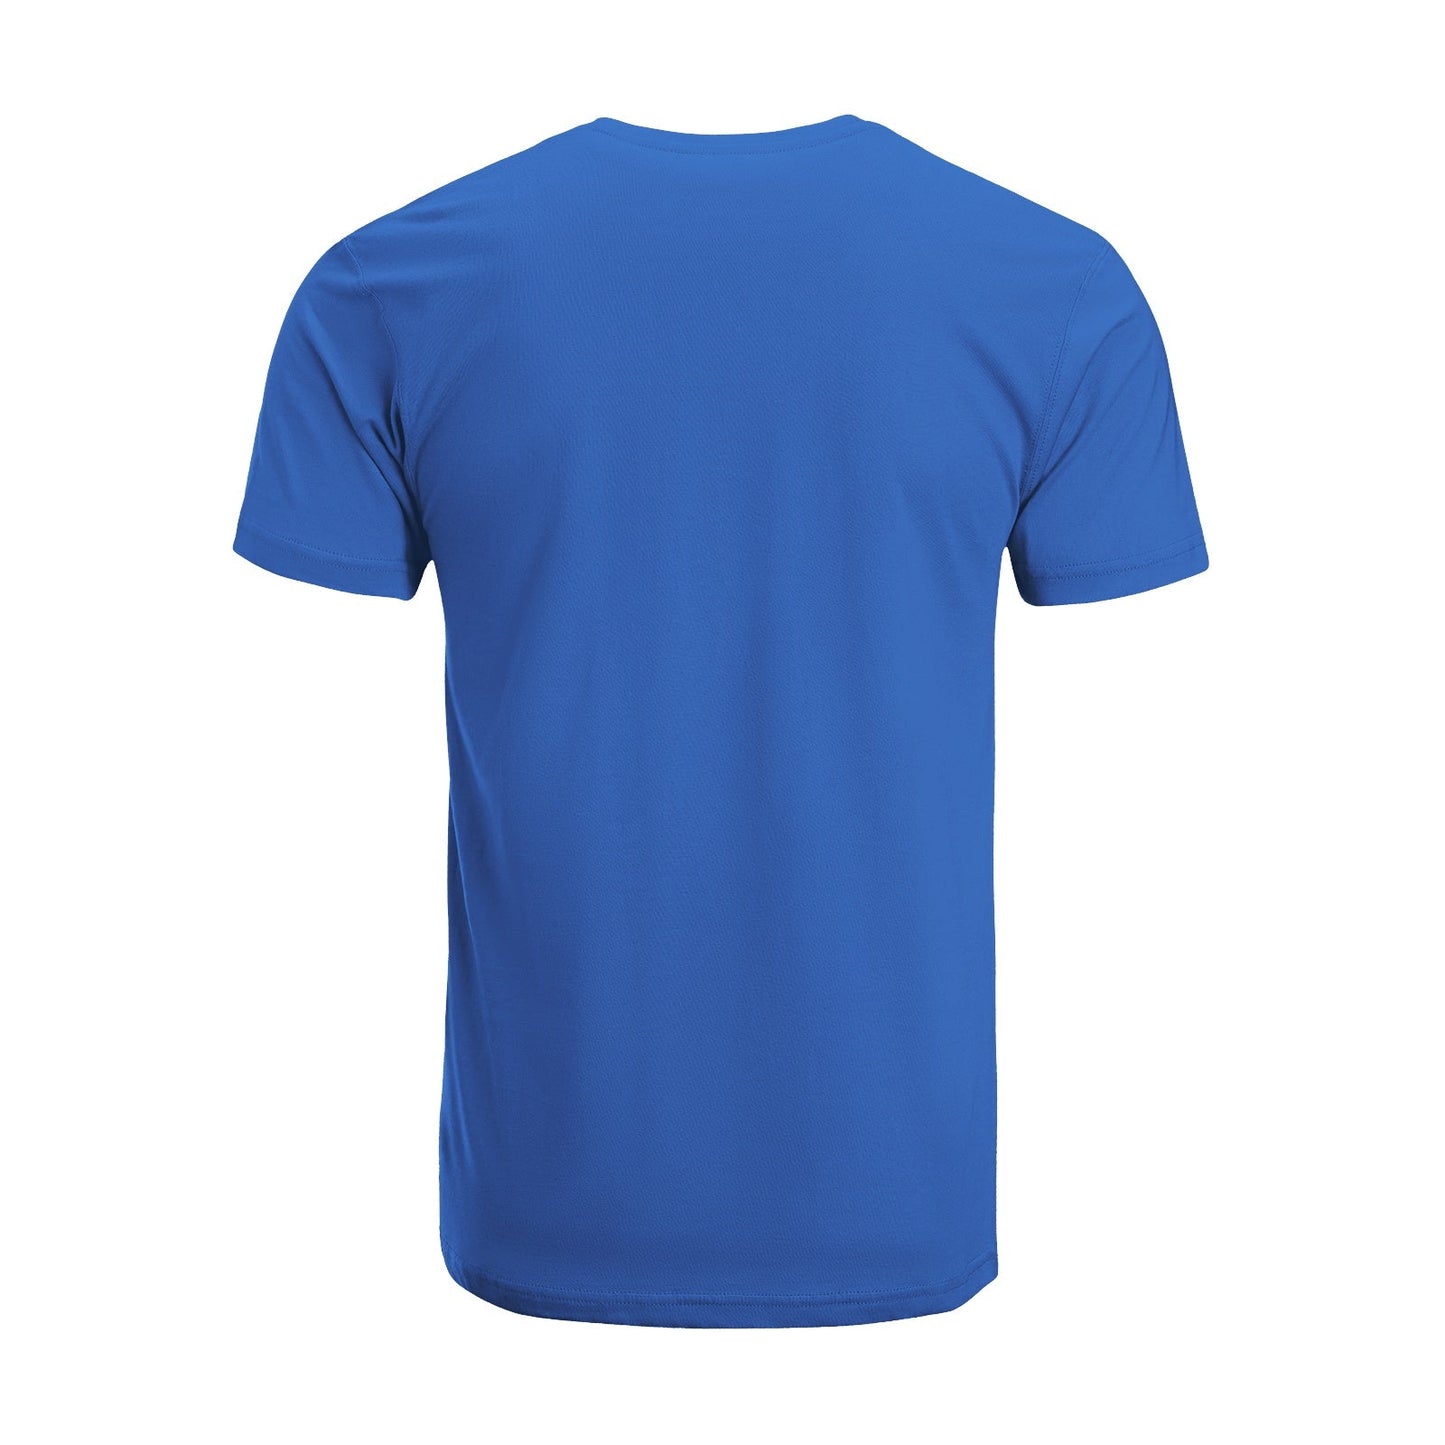 Unisex Short Sleeve Crew Neck Cotton Jersey T-Shirt USA 18